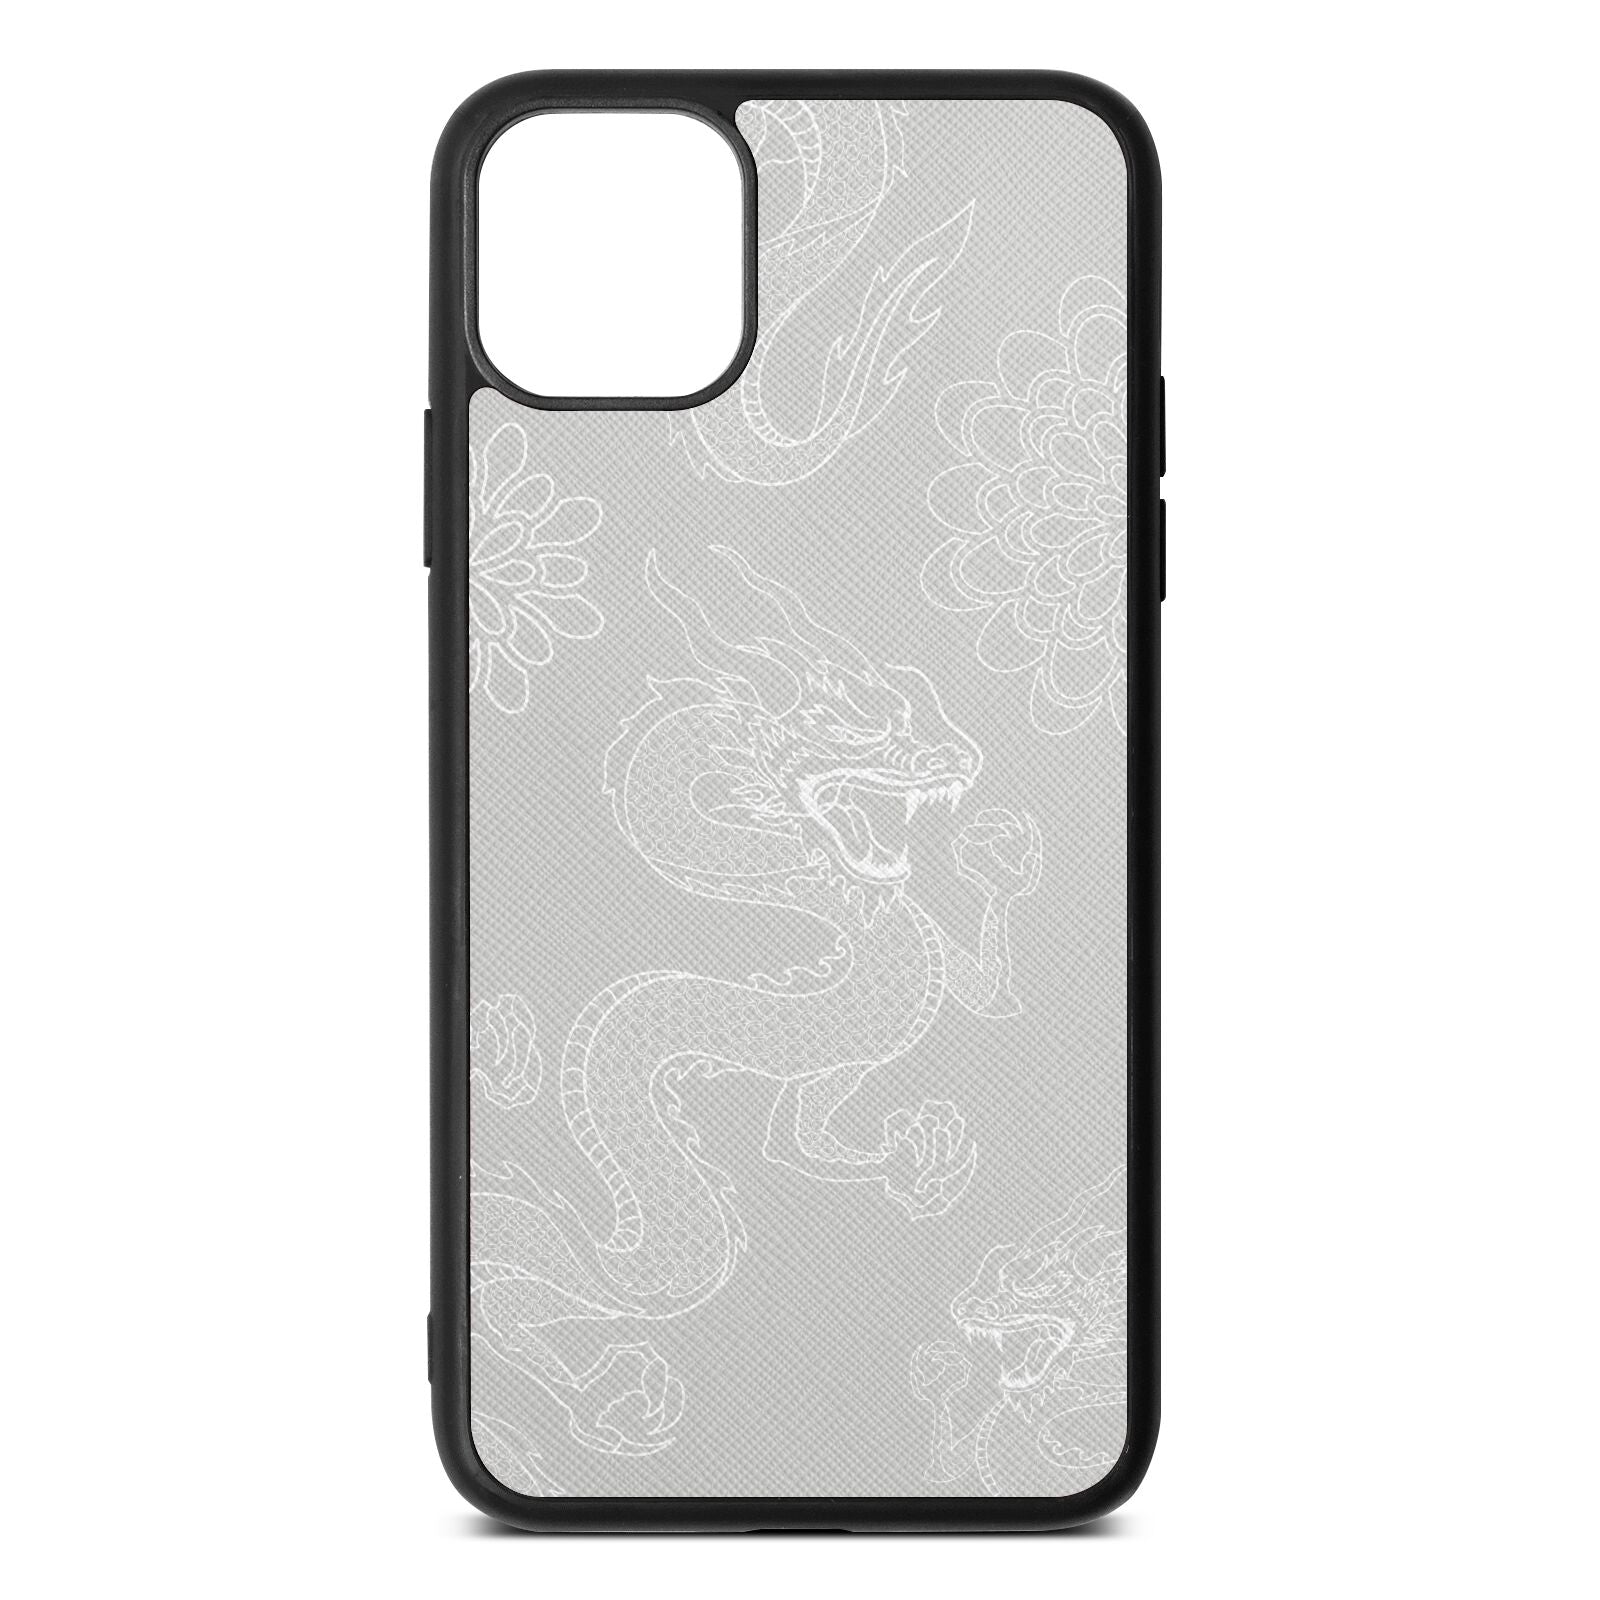 Dragons Silver Saffiano Leather iPhone 11 Pro Max Case